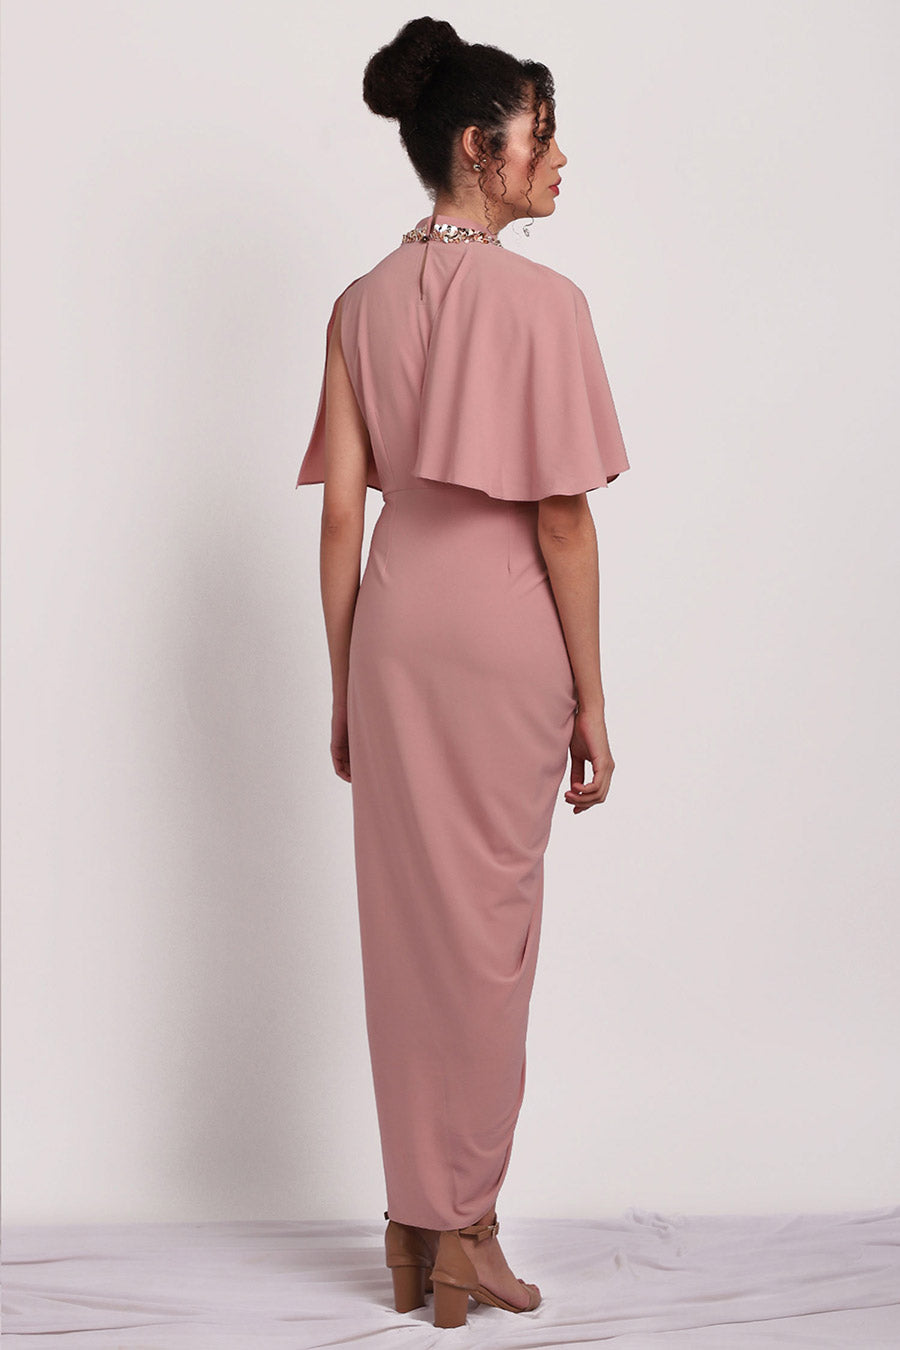 Blush Pink Cape Drape Dress